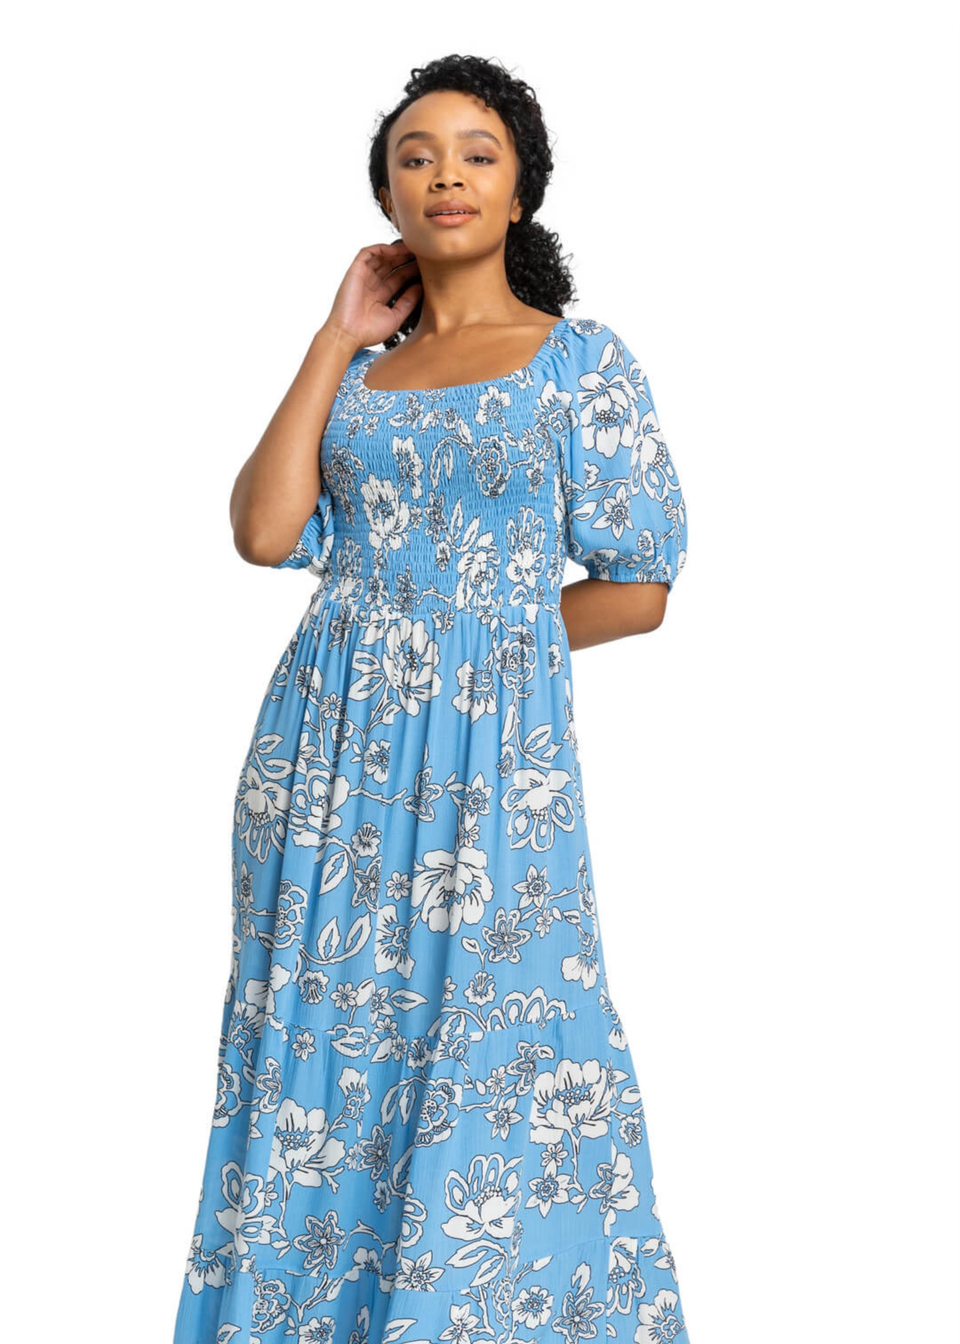 Blue Petite Floral Print Shirred Bodice Maxi Dress